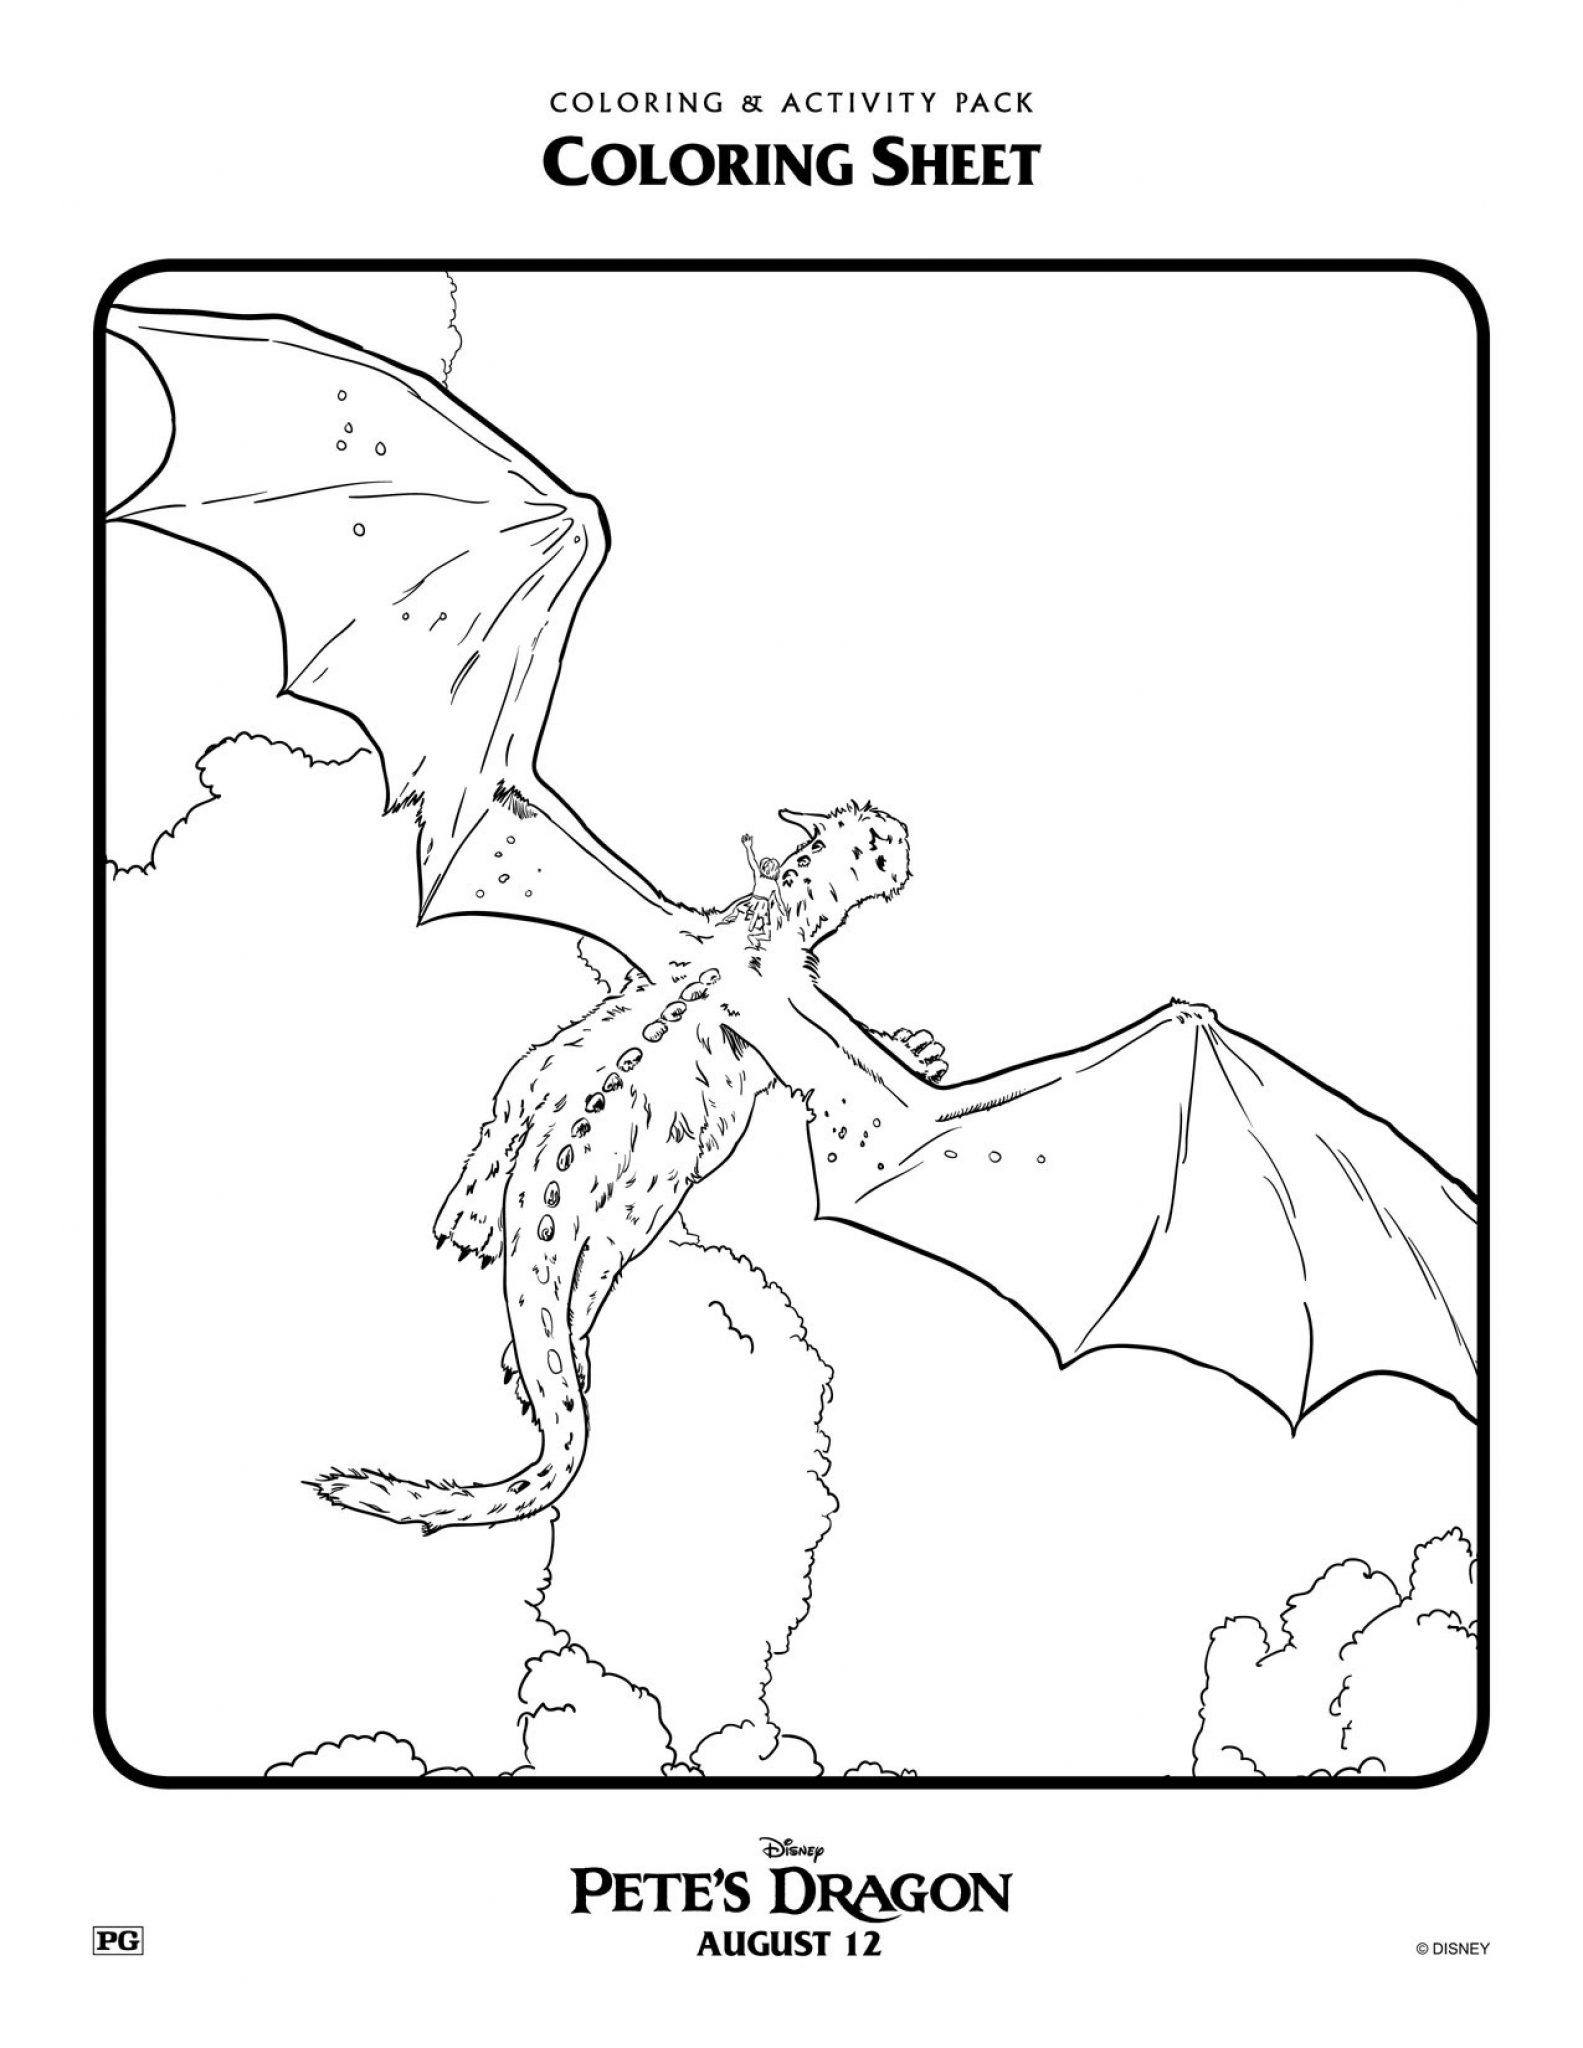 Pete's Dragon-Coloring Pages-2 - Disney Gals